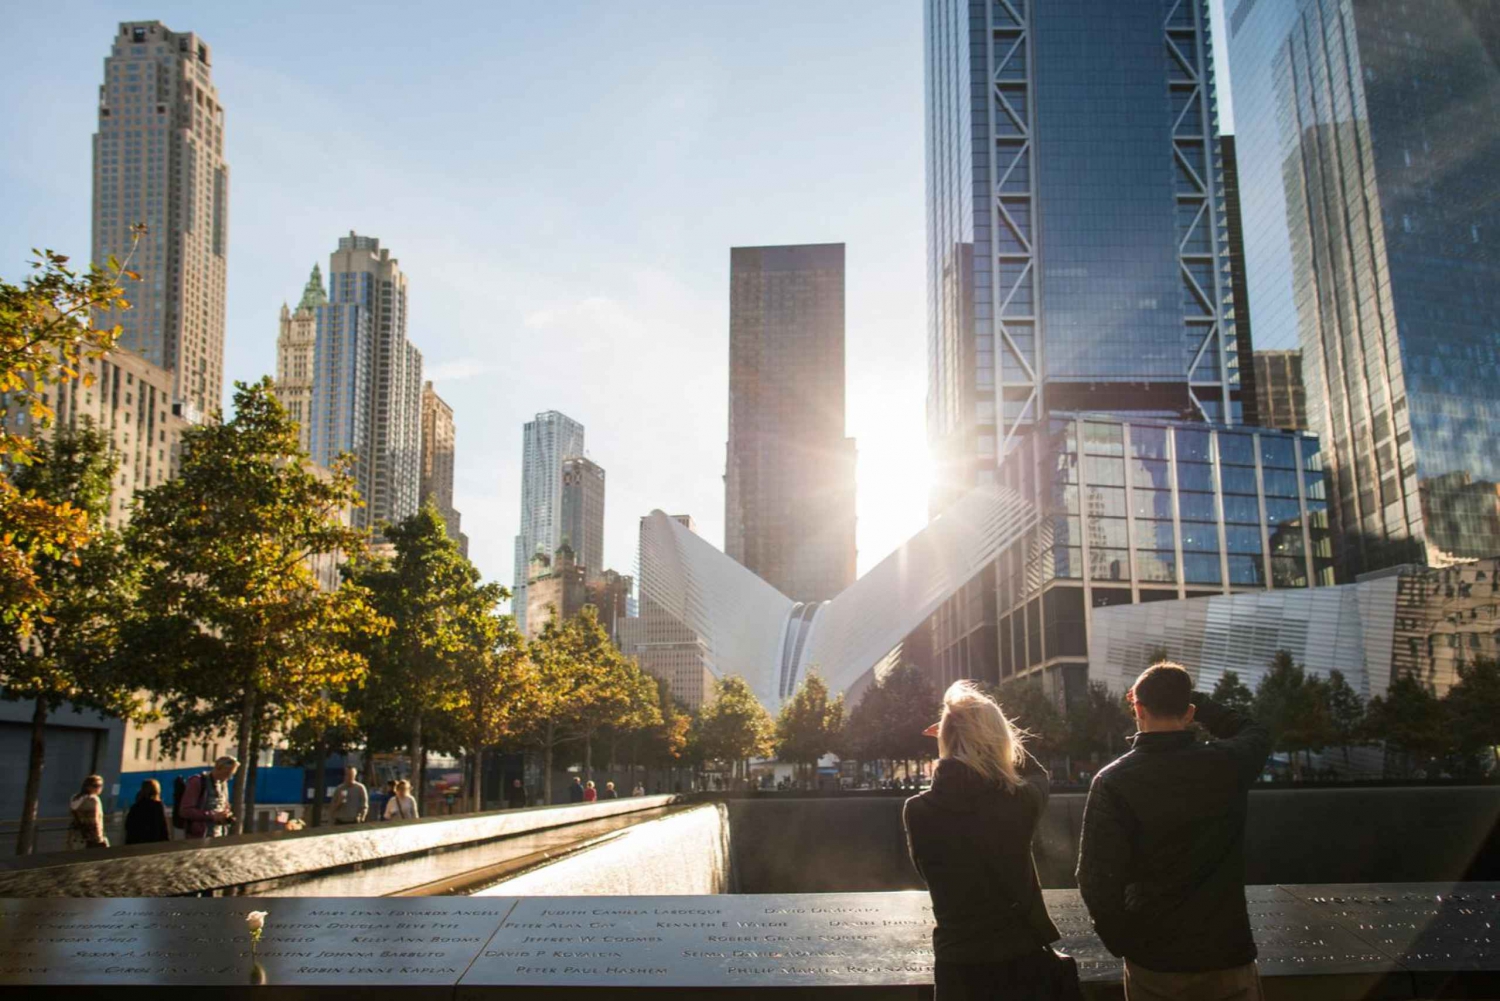 New York City: 9/11 Memorial - Ground Zero Walking Tour